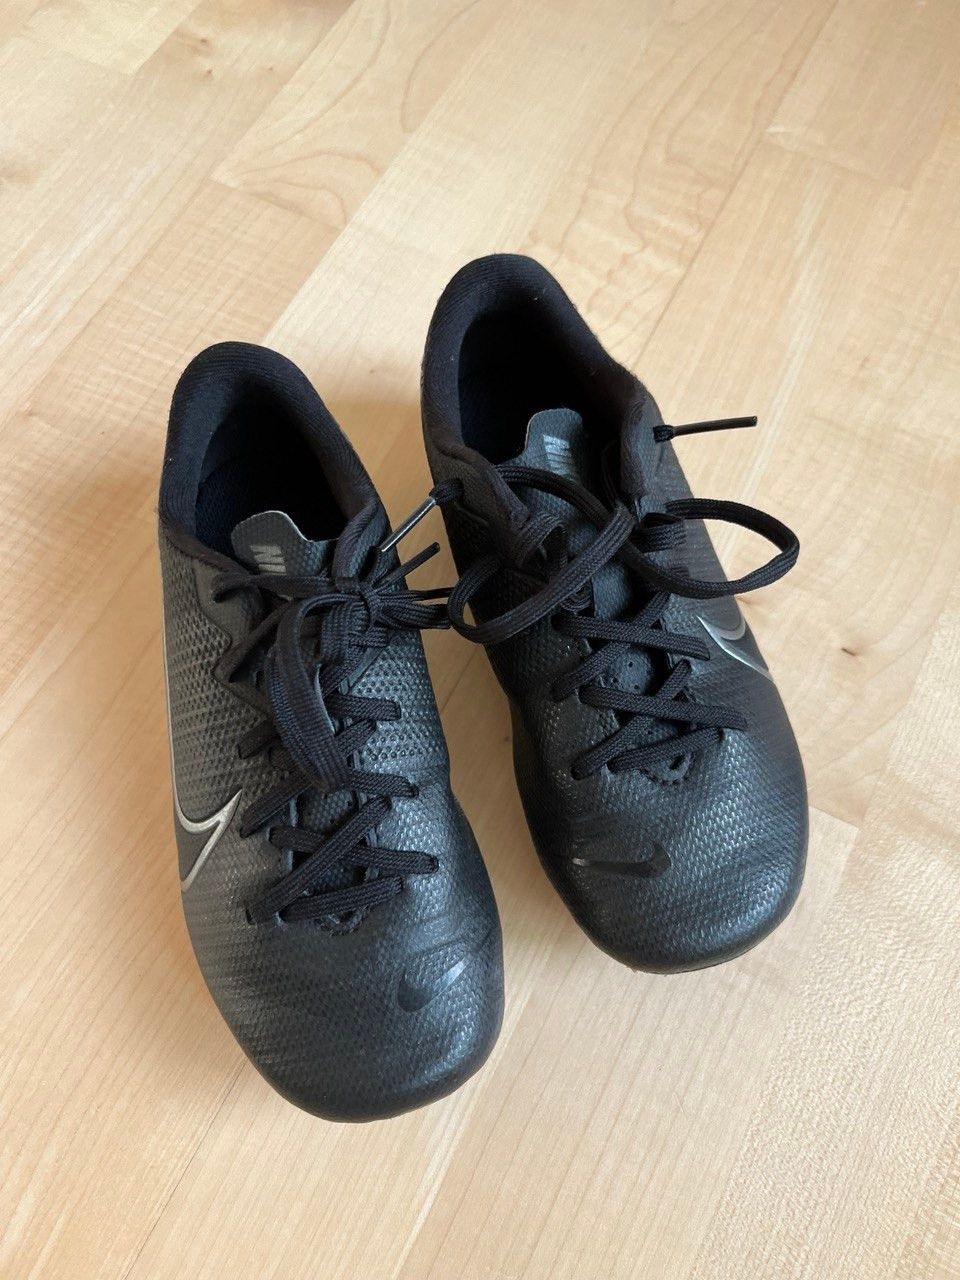 Nike Mercurial Vapor jalkapallo kengät eu 28,5